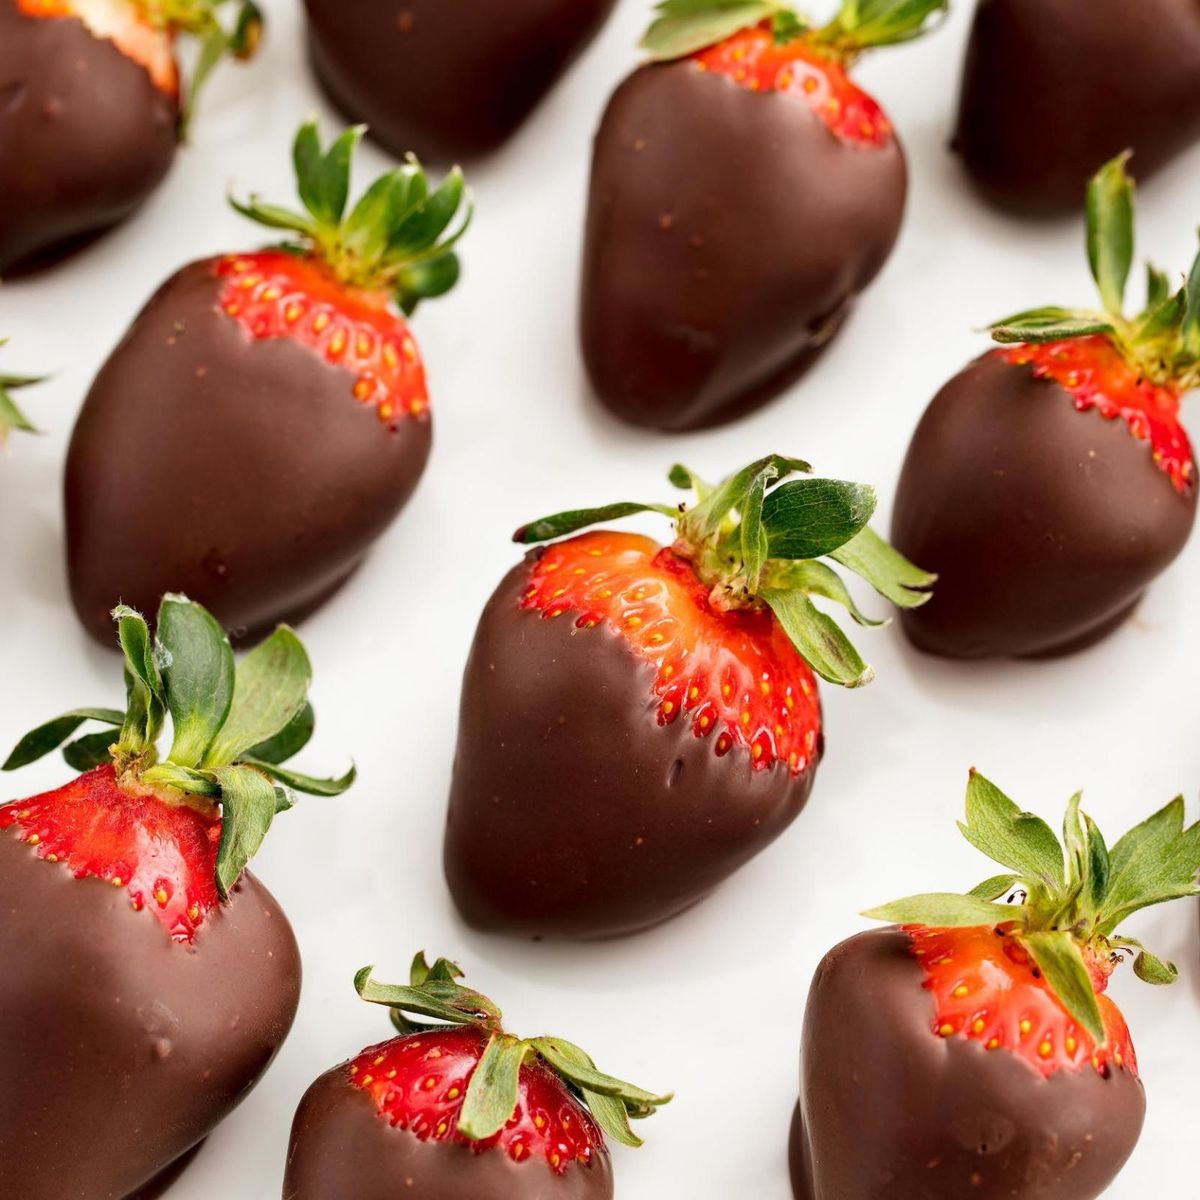 Best Chocolate-Covered Strawberries Recipe - How to Make Chocolate-Covered  Strawberries